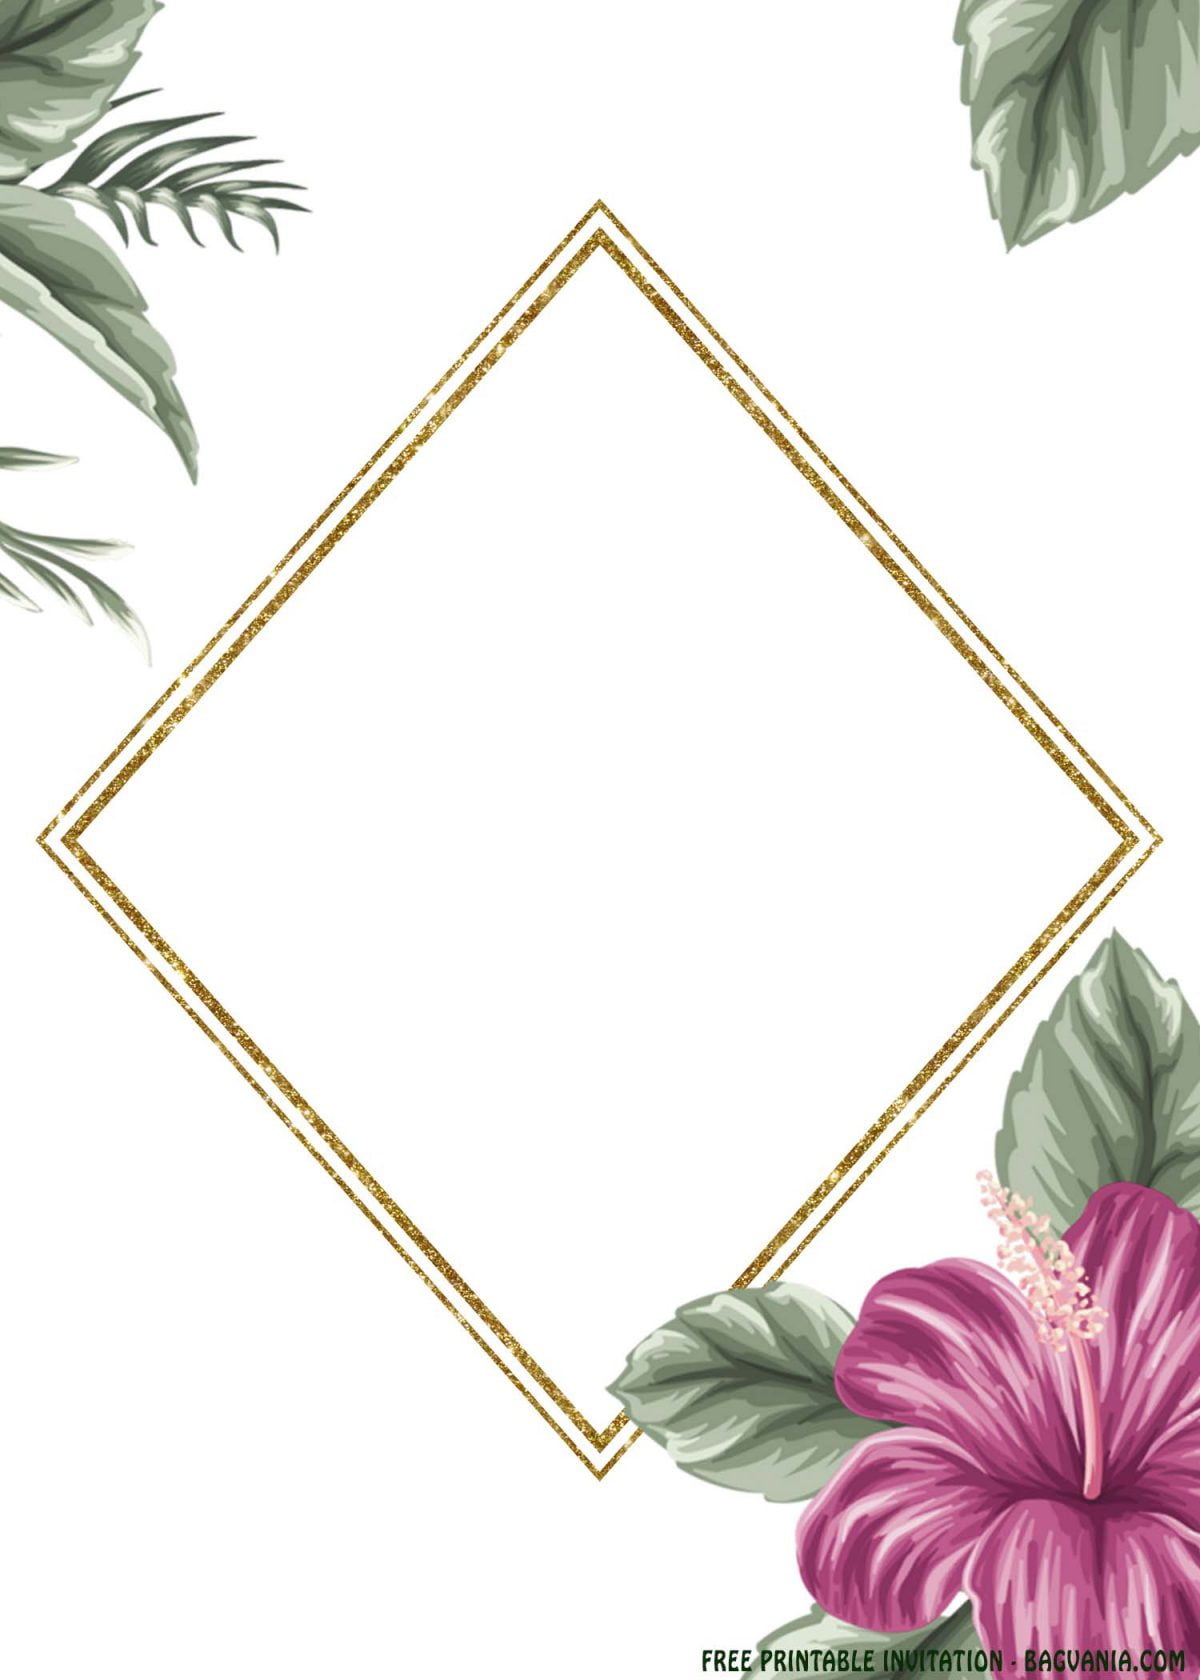 Free Printable Tropical Boho Invitation Templates With White Background